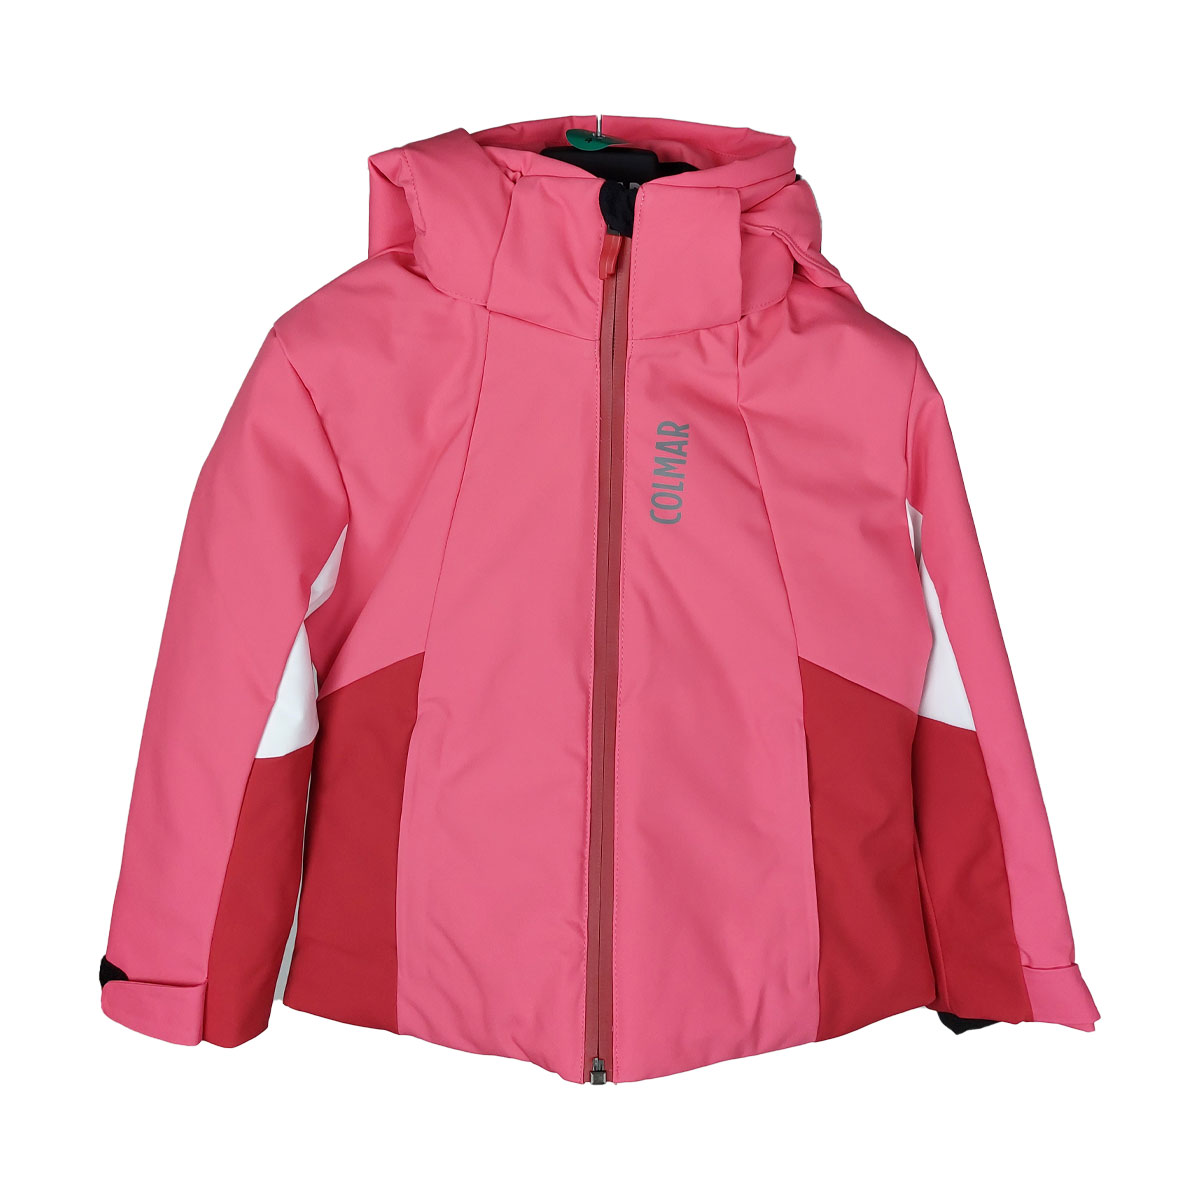 https://sportnetit.com/media/catalog/product/c/o/colmar-giacca-sci-bambina-colorblock-in-ovatta-rosa.jpg